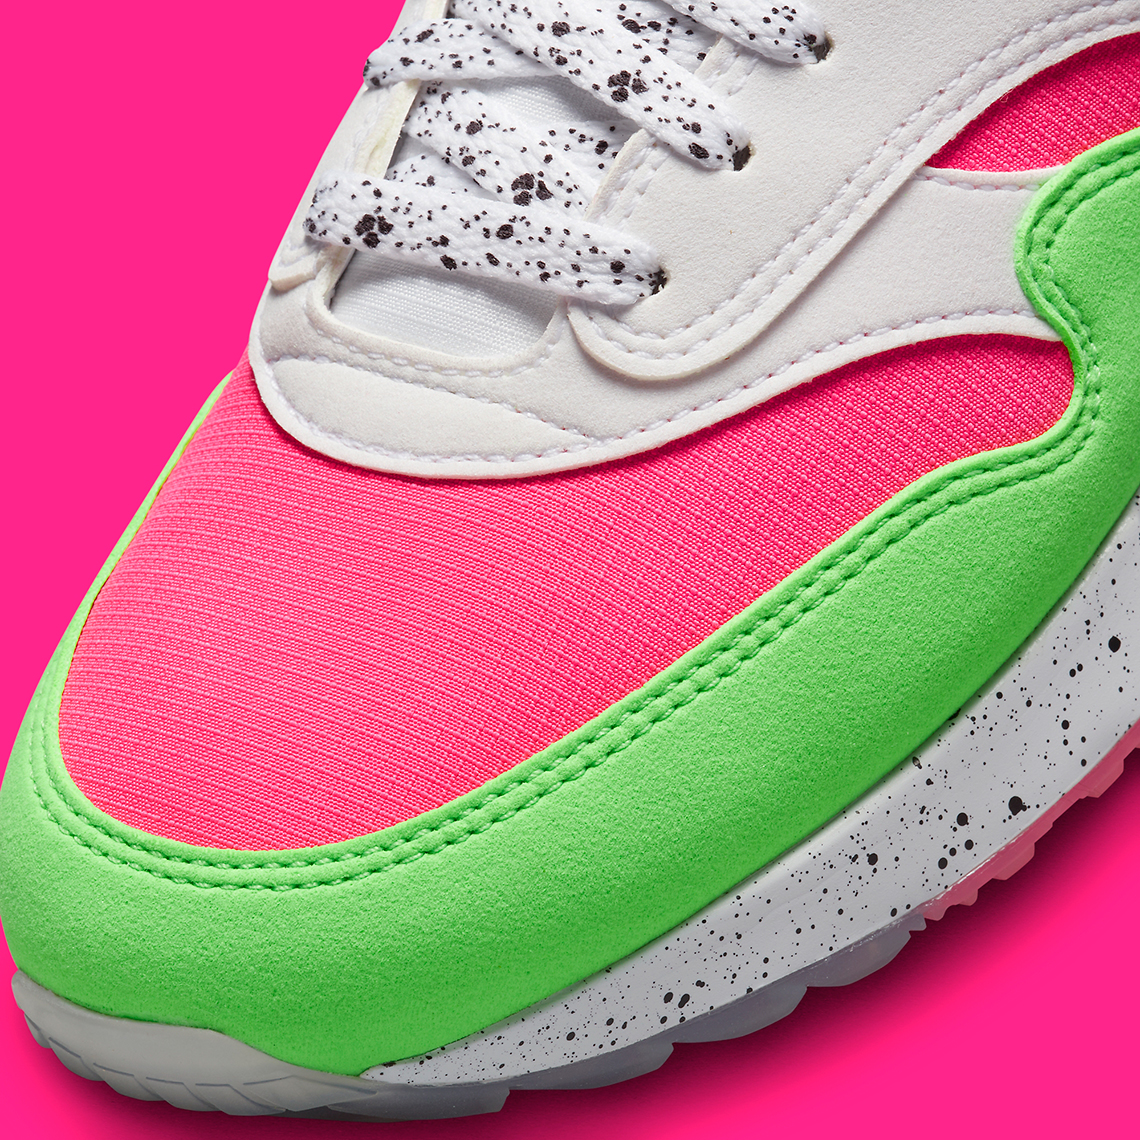 Nike nike air max foamdome boot for sale Airbrush Green Pink 11